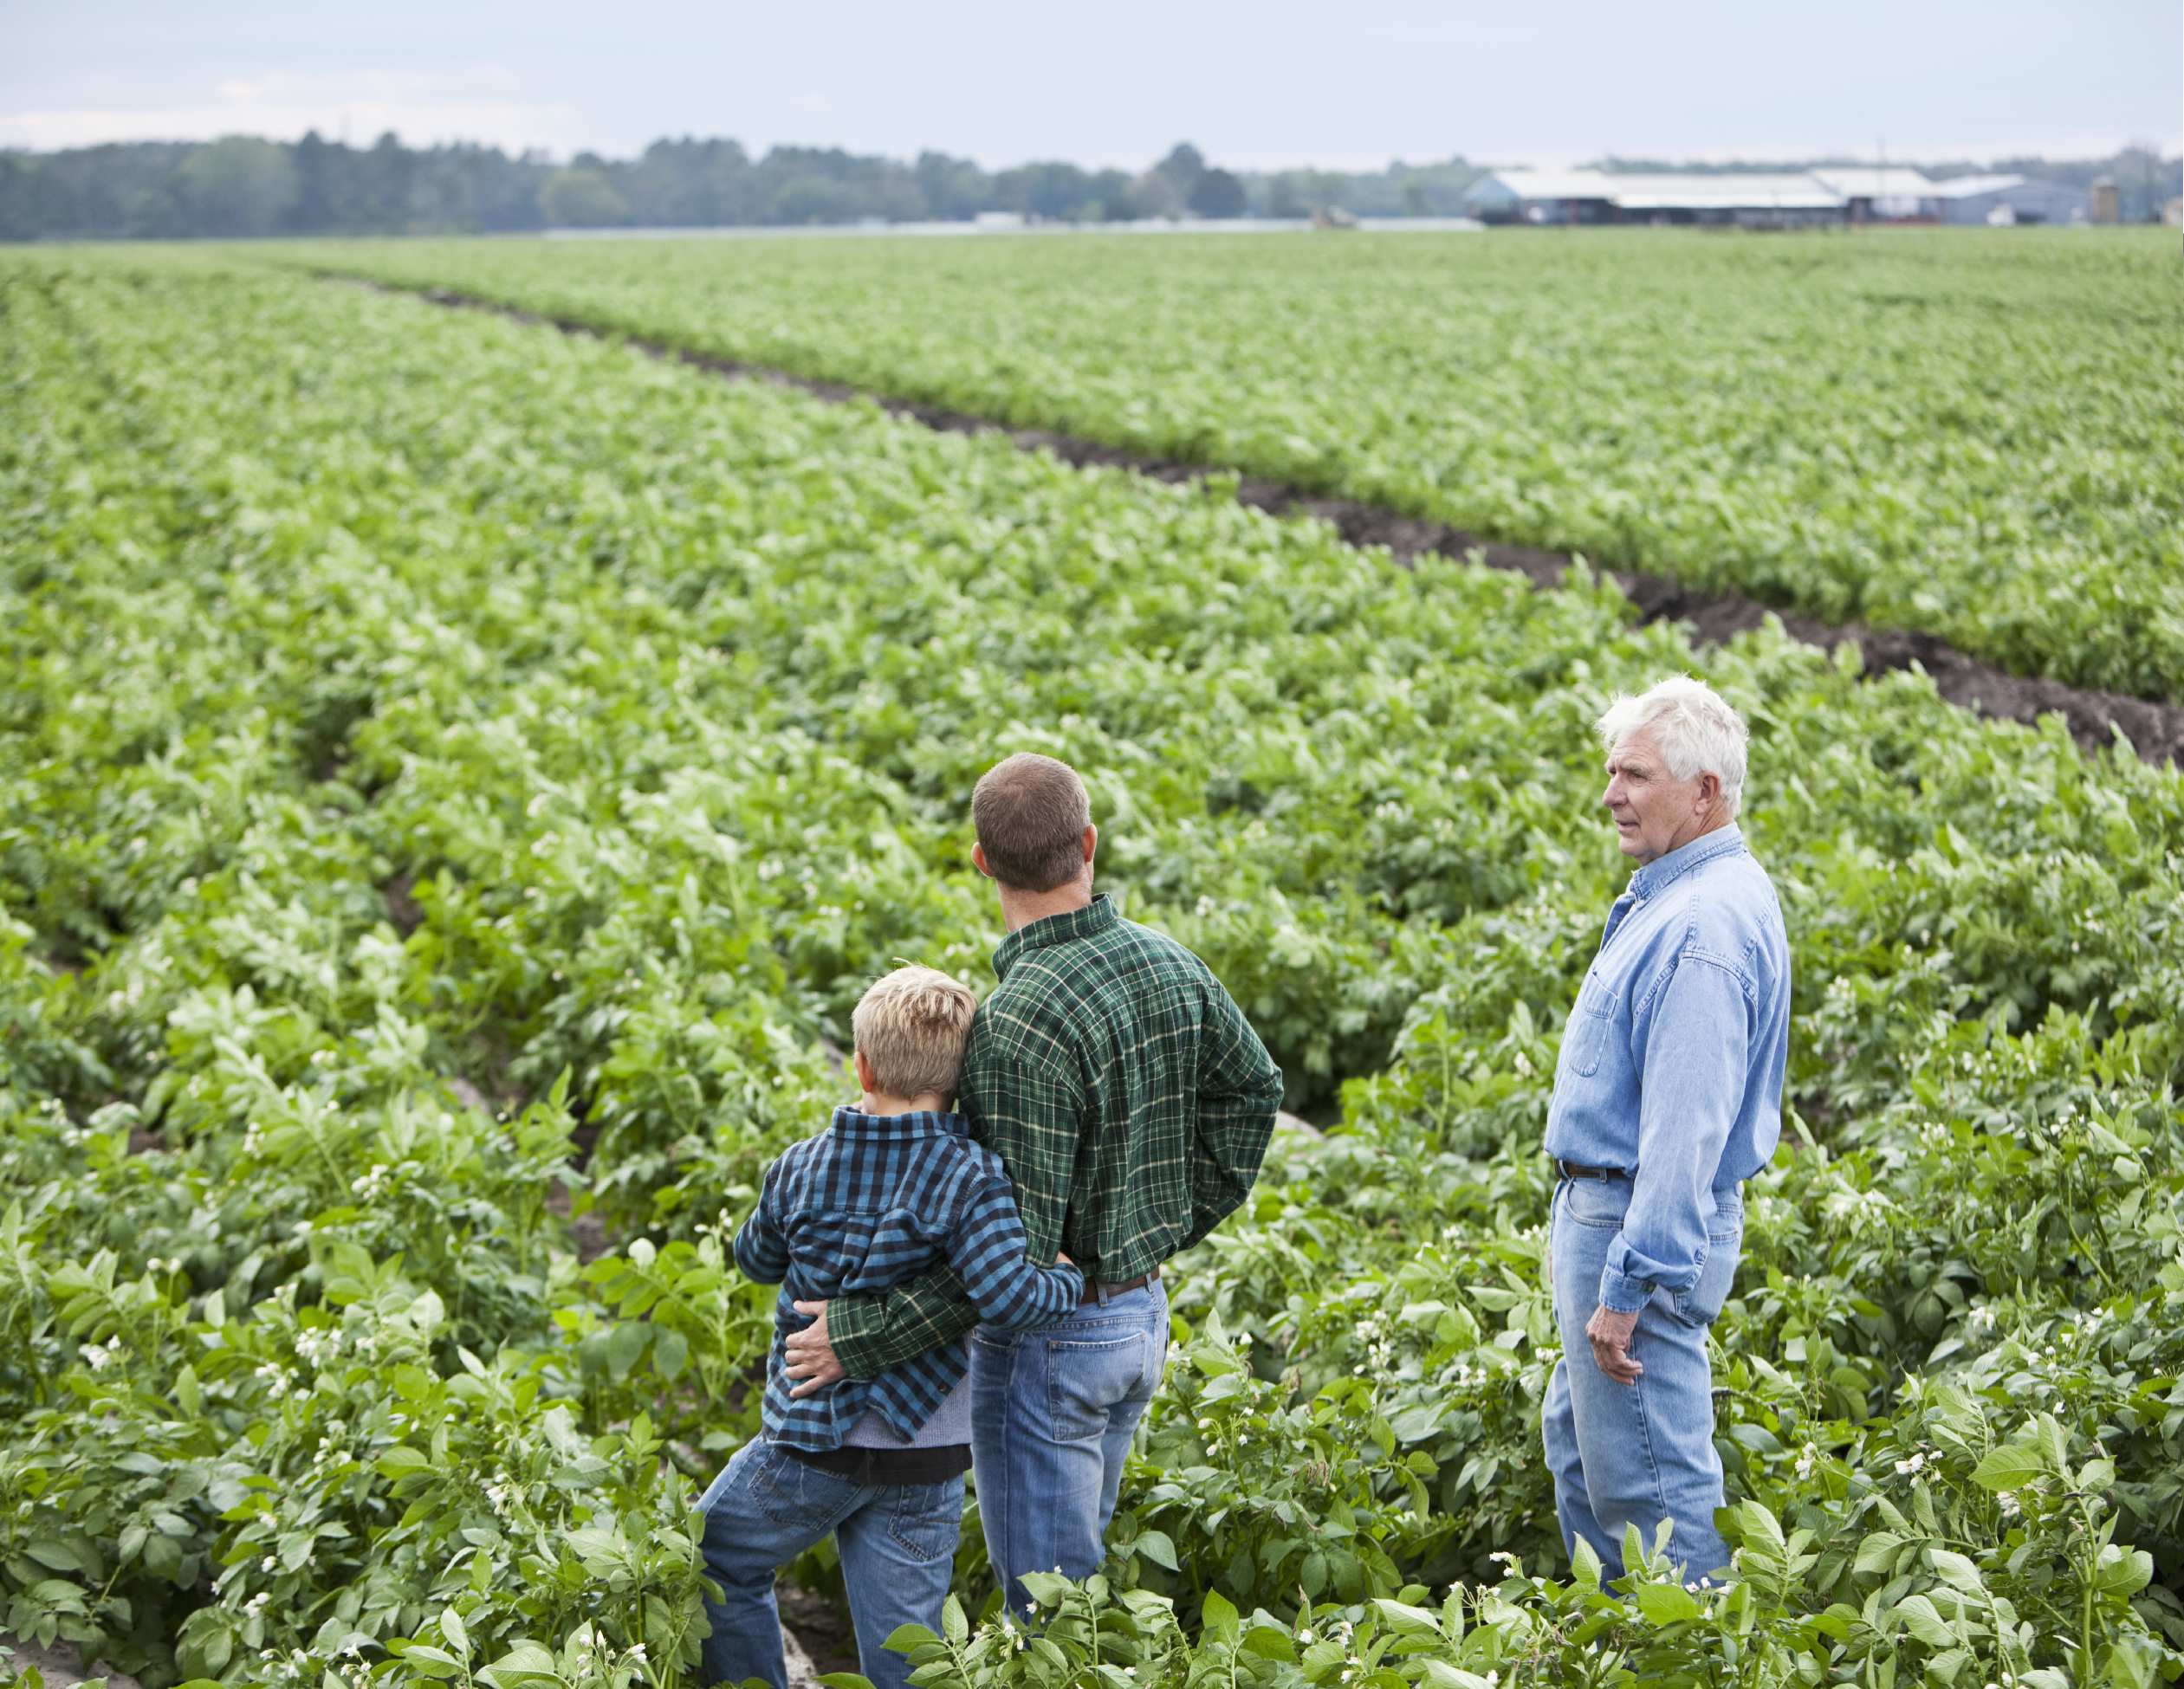 Congressional Tax Plans Jeopardize the Farm Safety Net, CBO Analysis Says